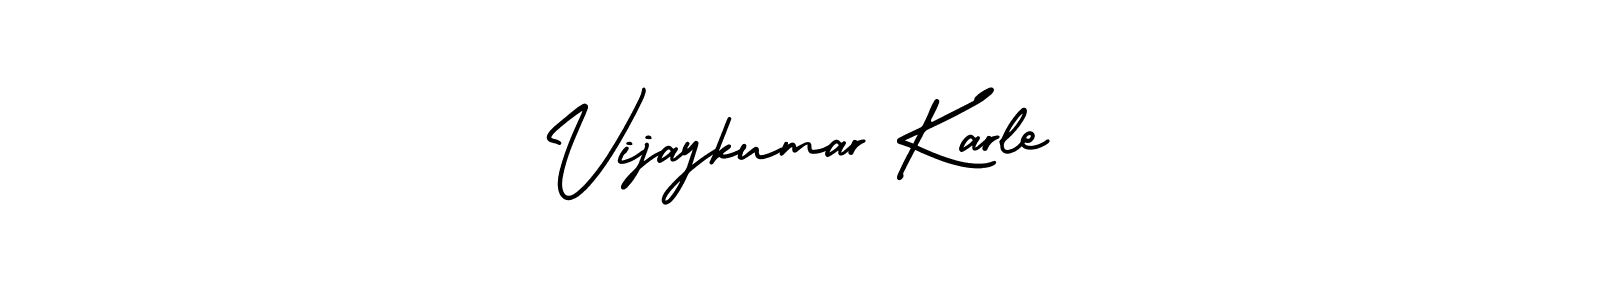 Make a beautiful signature design for name Vijaykumar Karle. Use this online signature maker to create a handwritten signature for free. Vijaykumar Karle signature style 3 images and pictures png